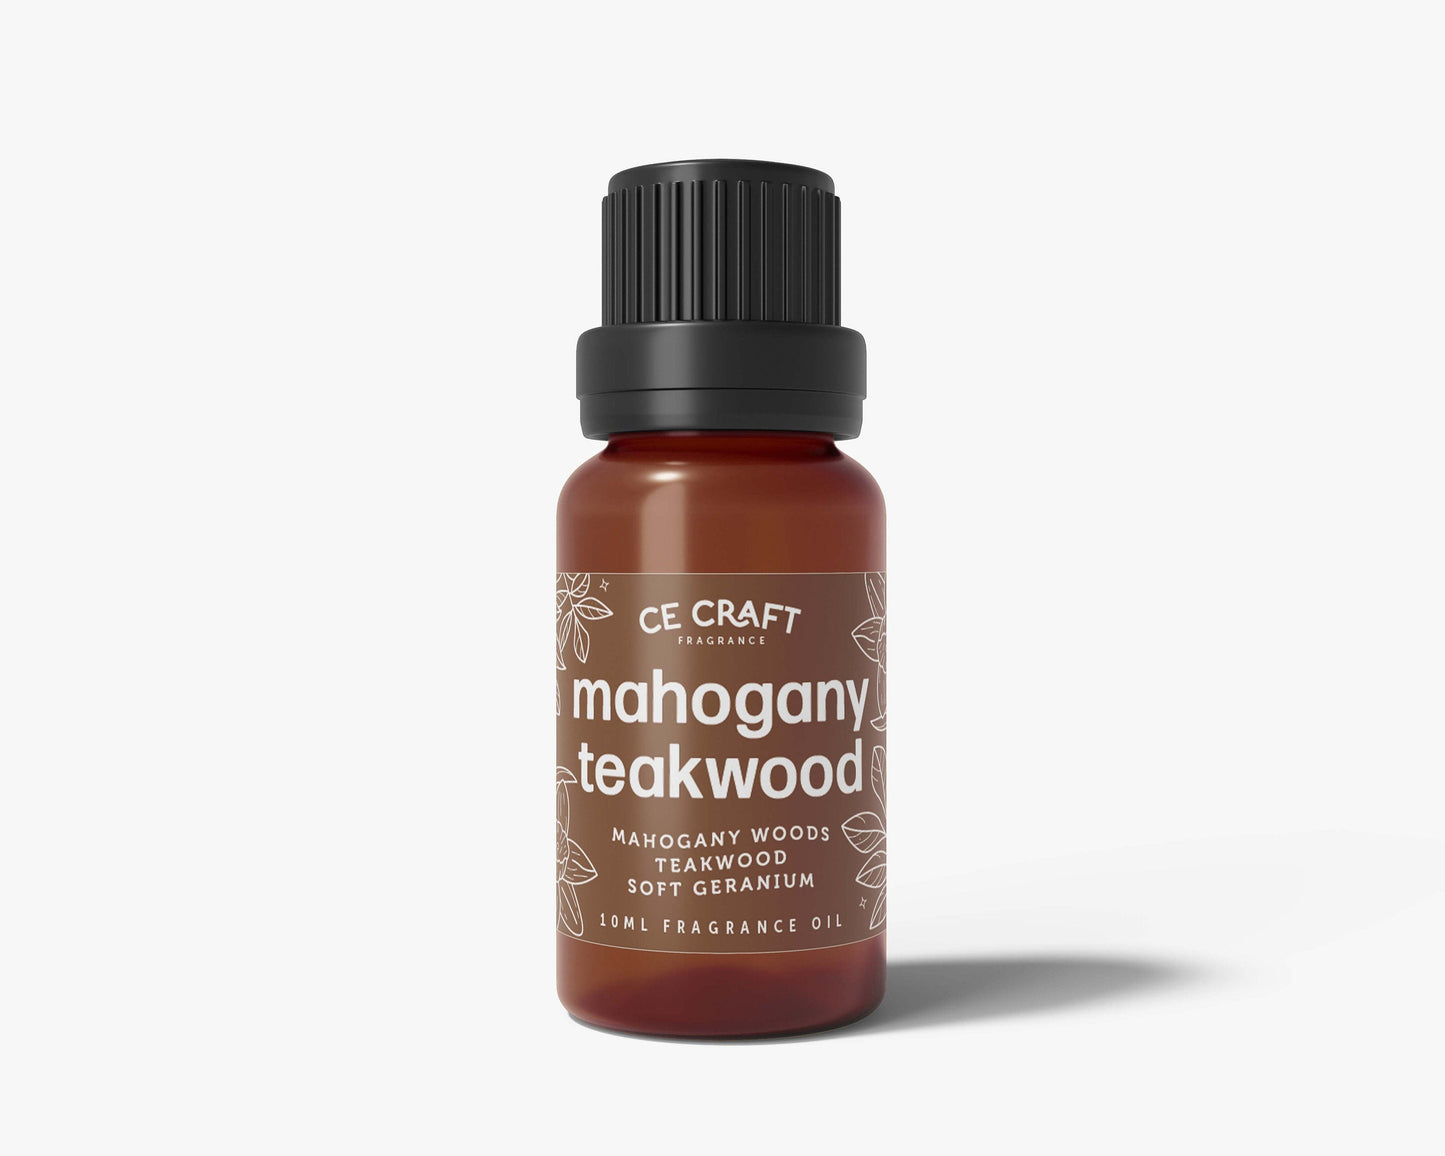 Mahogany Teakwood Diffuser Oil | Mallory Candle Co